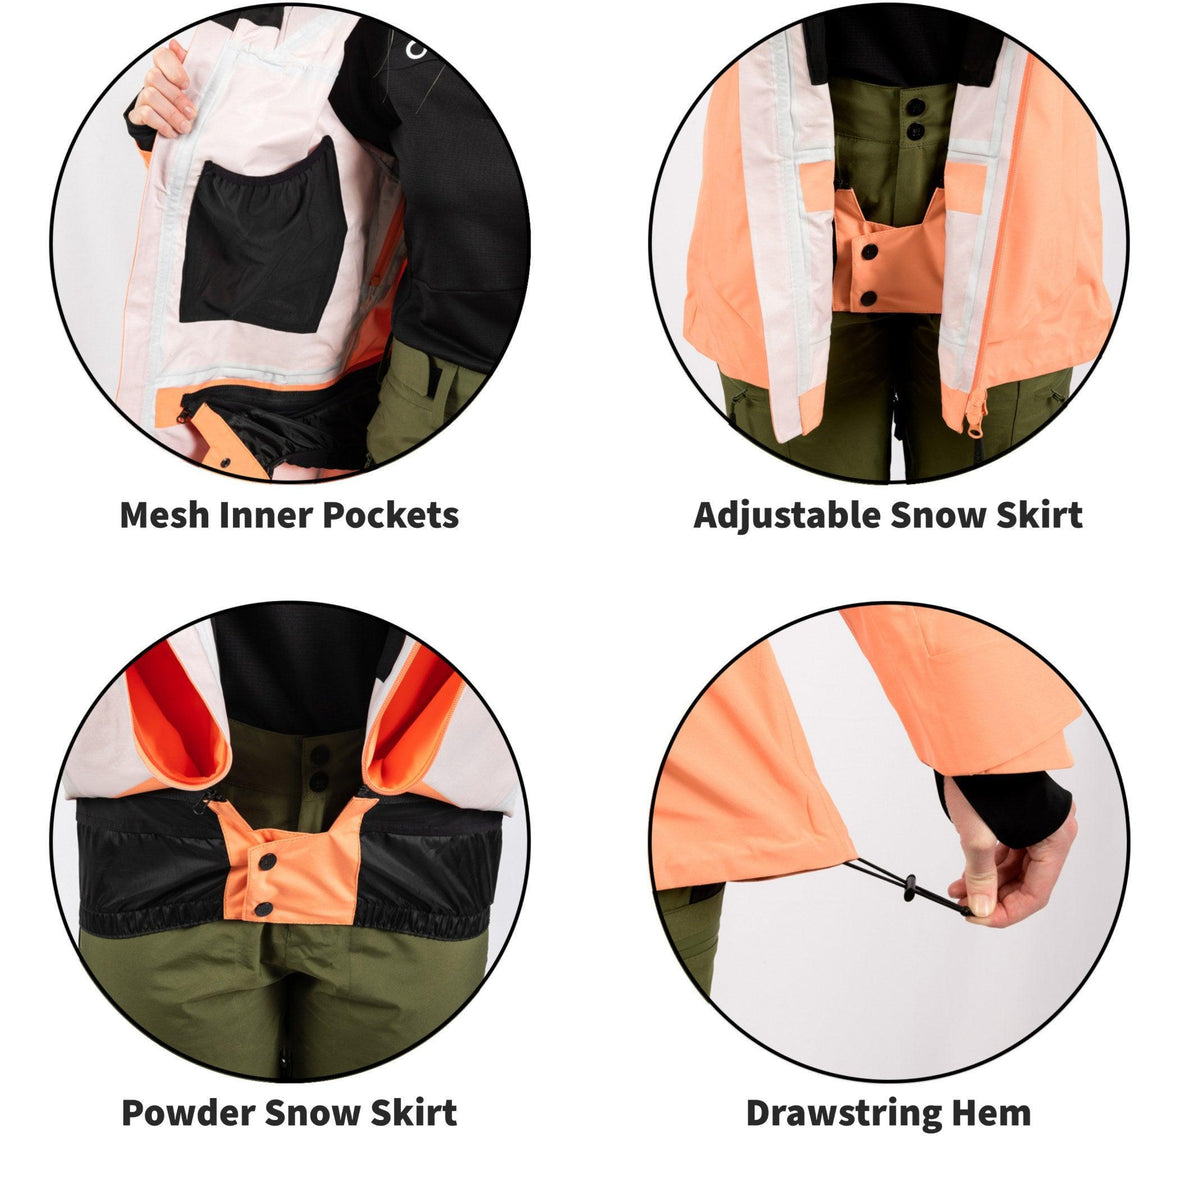 Ecoon Apparel Jacket Ecoexplorer Women Sustainable Clothing Recyclable  Premium Orange Boating Fishing Hiking Lifestyle Mountain Skiing  Snowboarding —